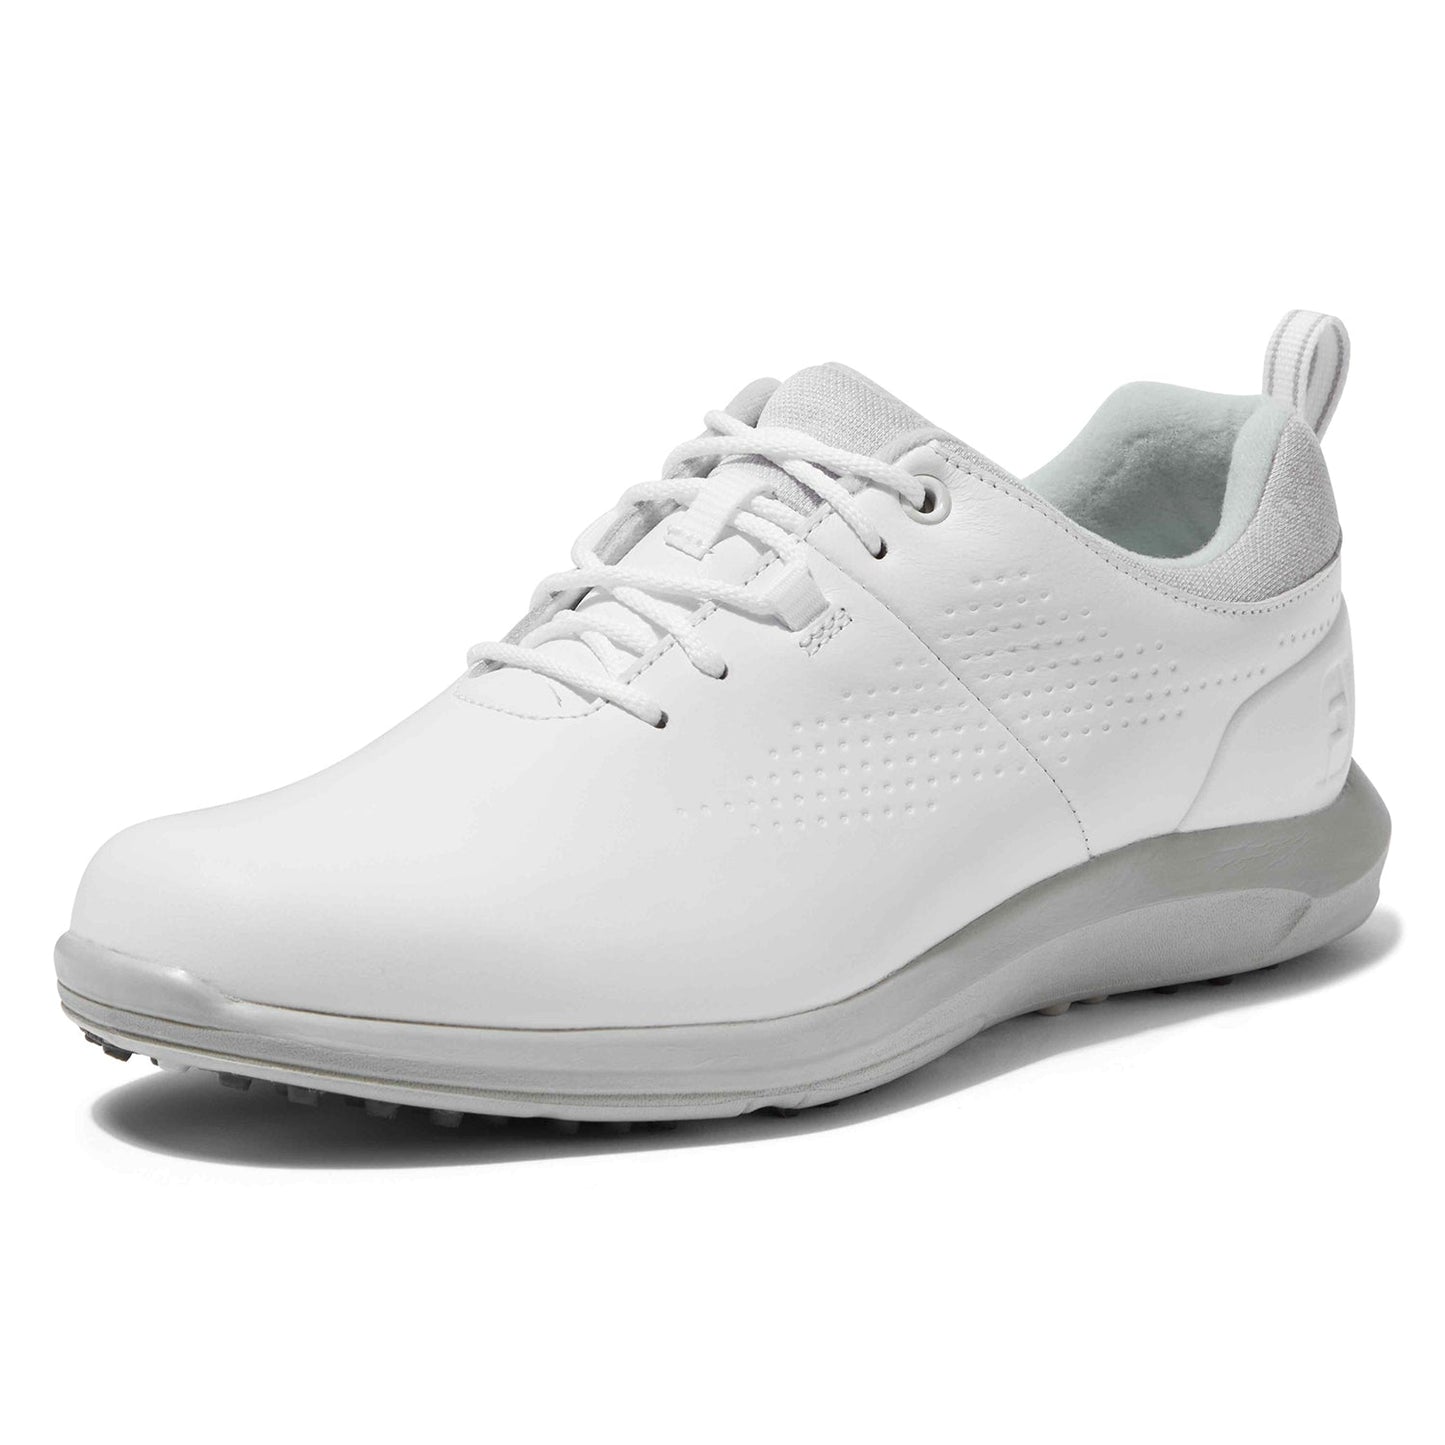 Footjoy Leisure LX Golf Shoes 92919